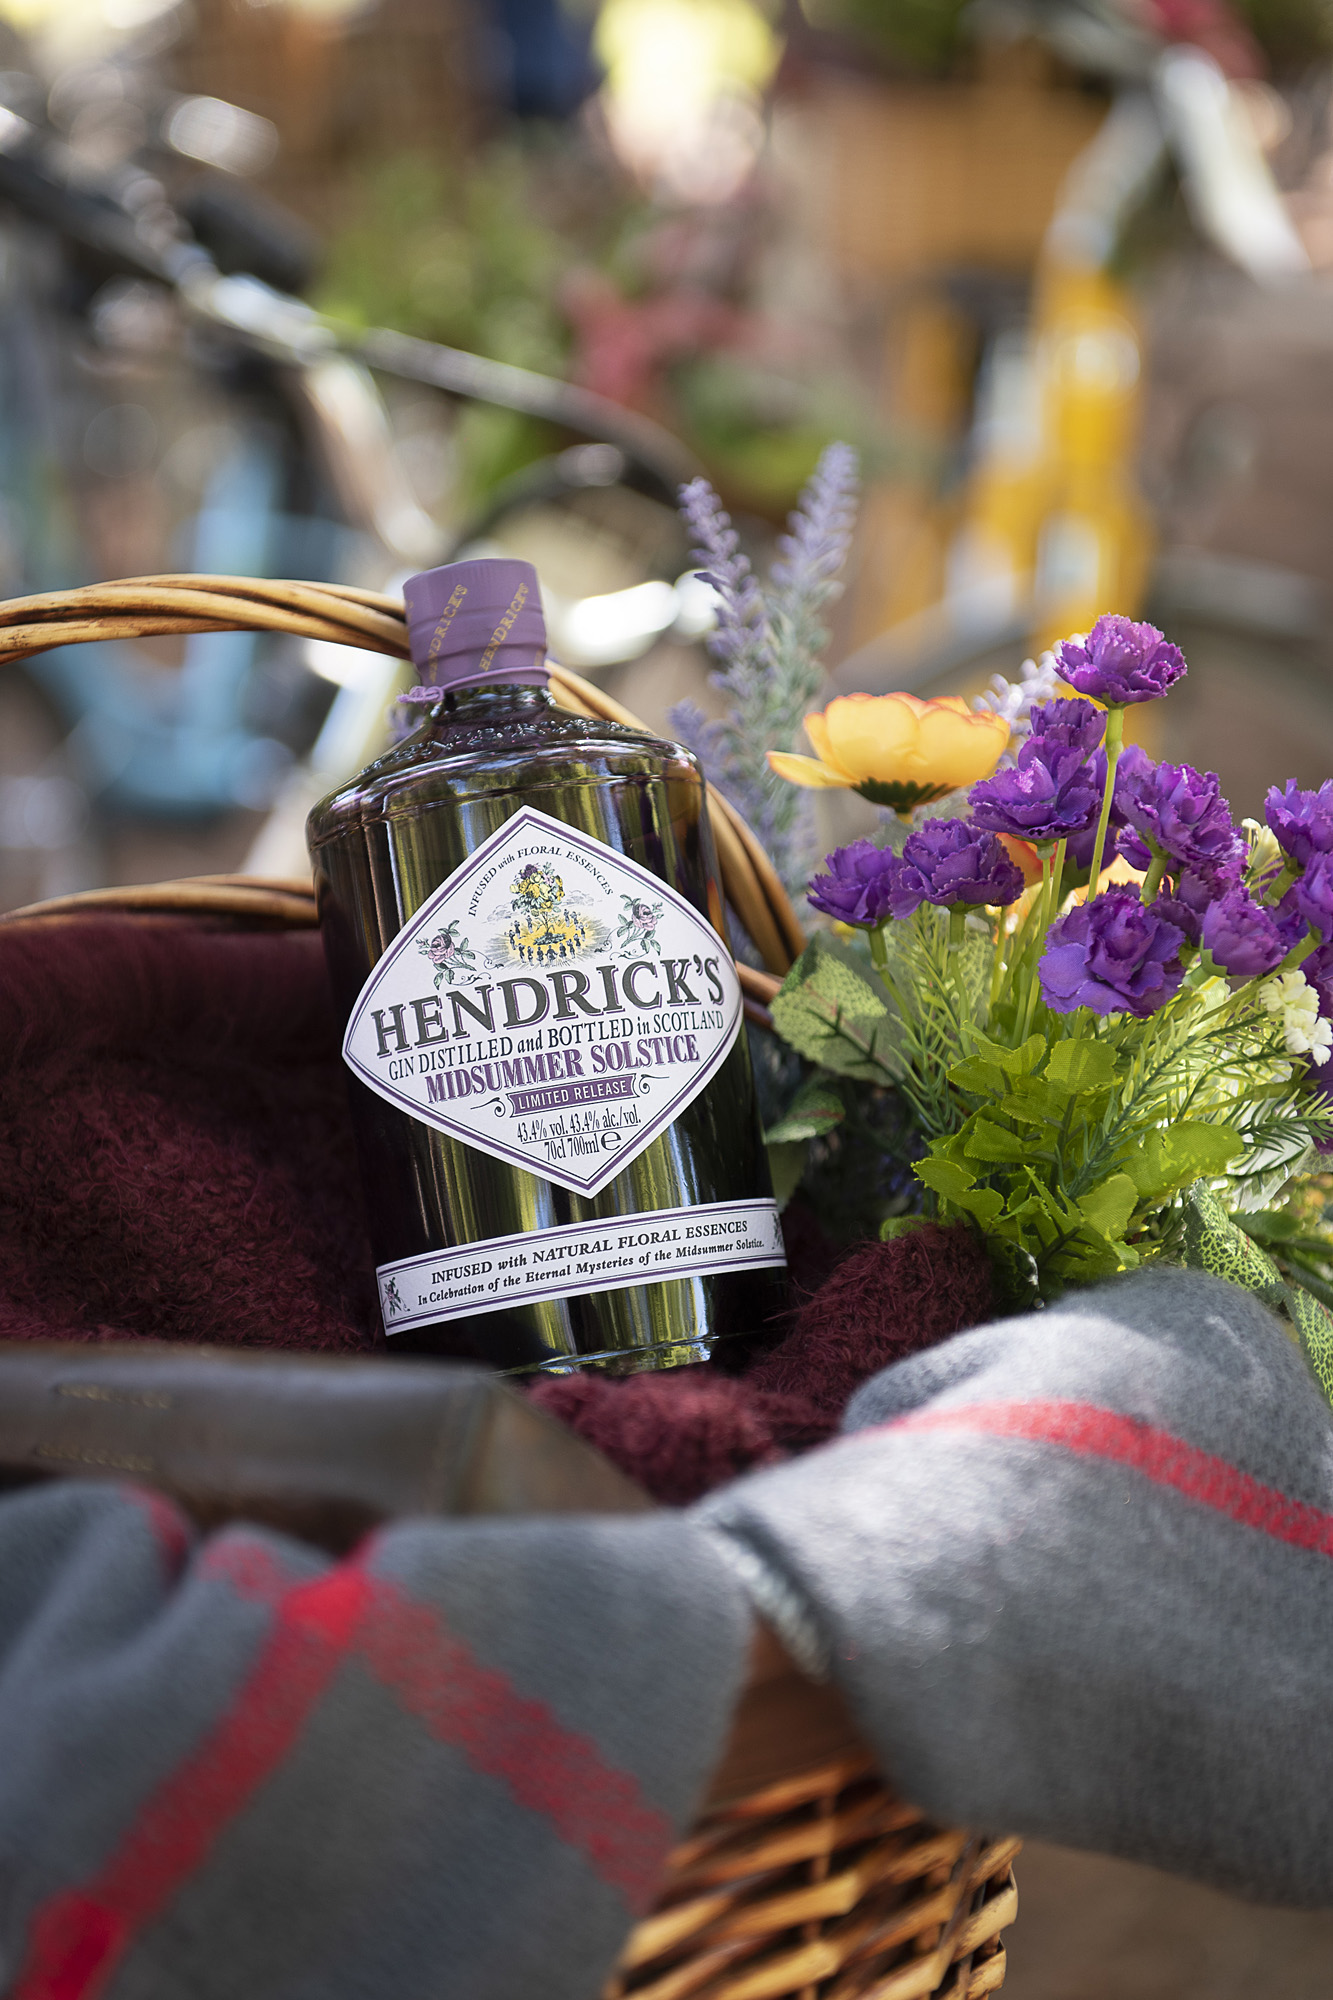 Amvyx Hendrick’s Gin sponsors the 6th Tweed Run